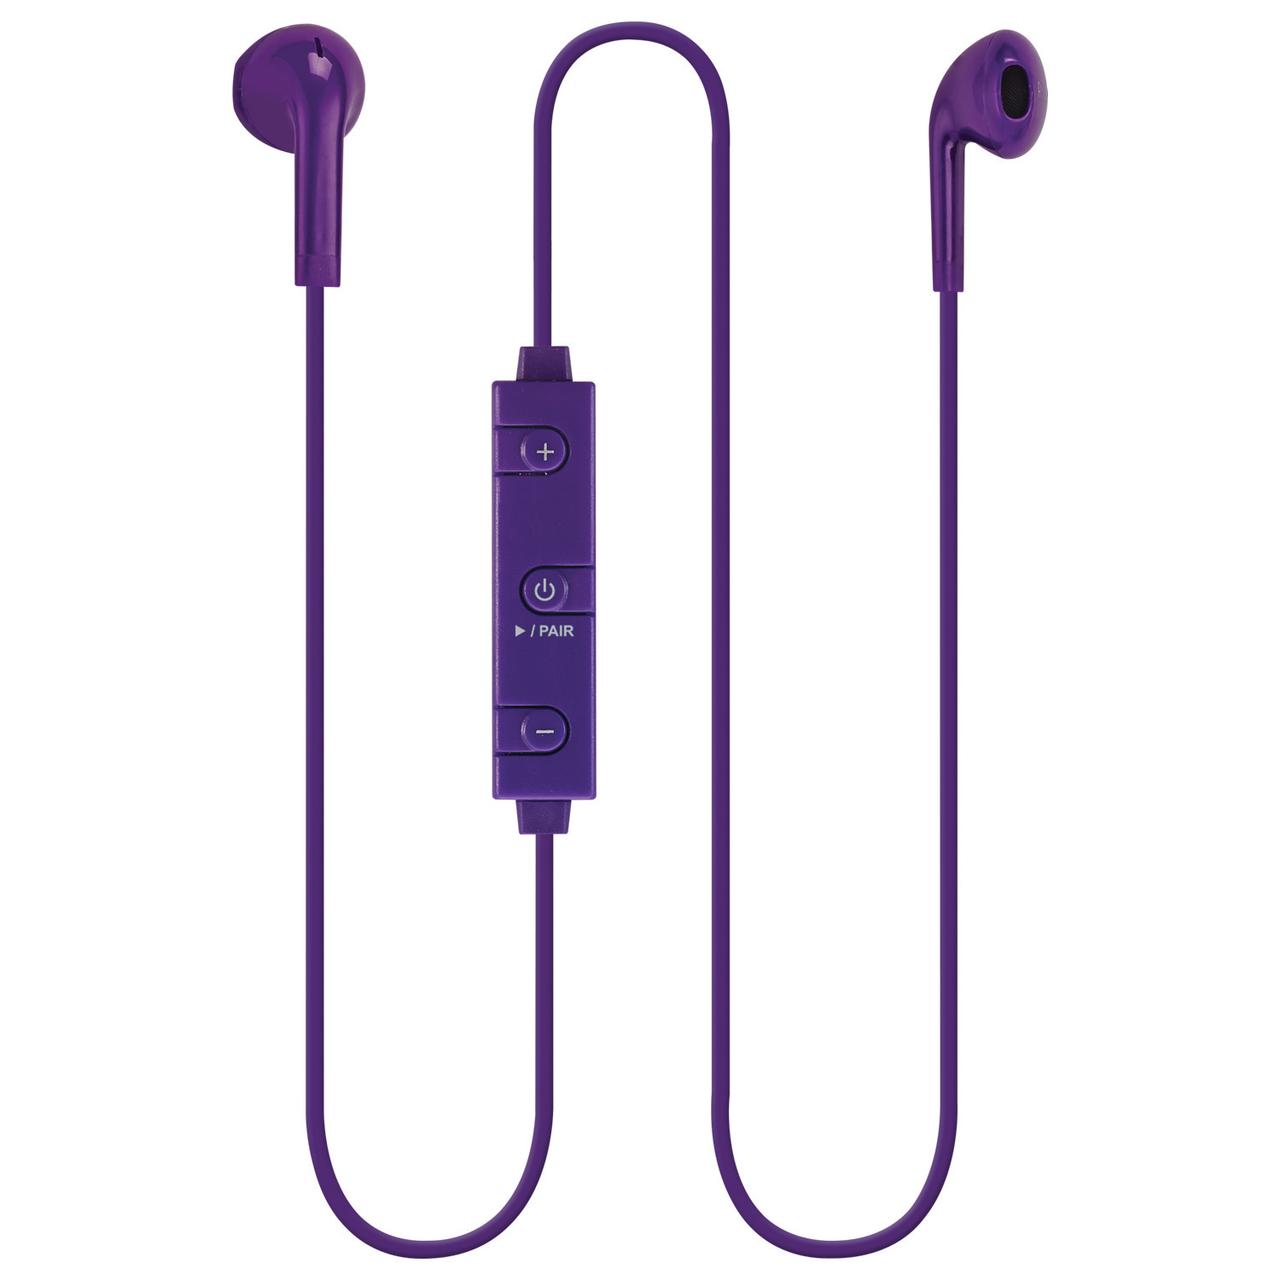 ILIVE IAEB07 Bluetooth Earbuds with Microphone, Purple